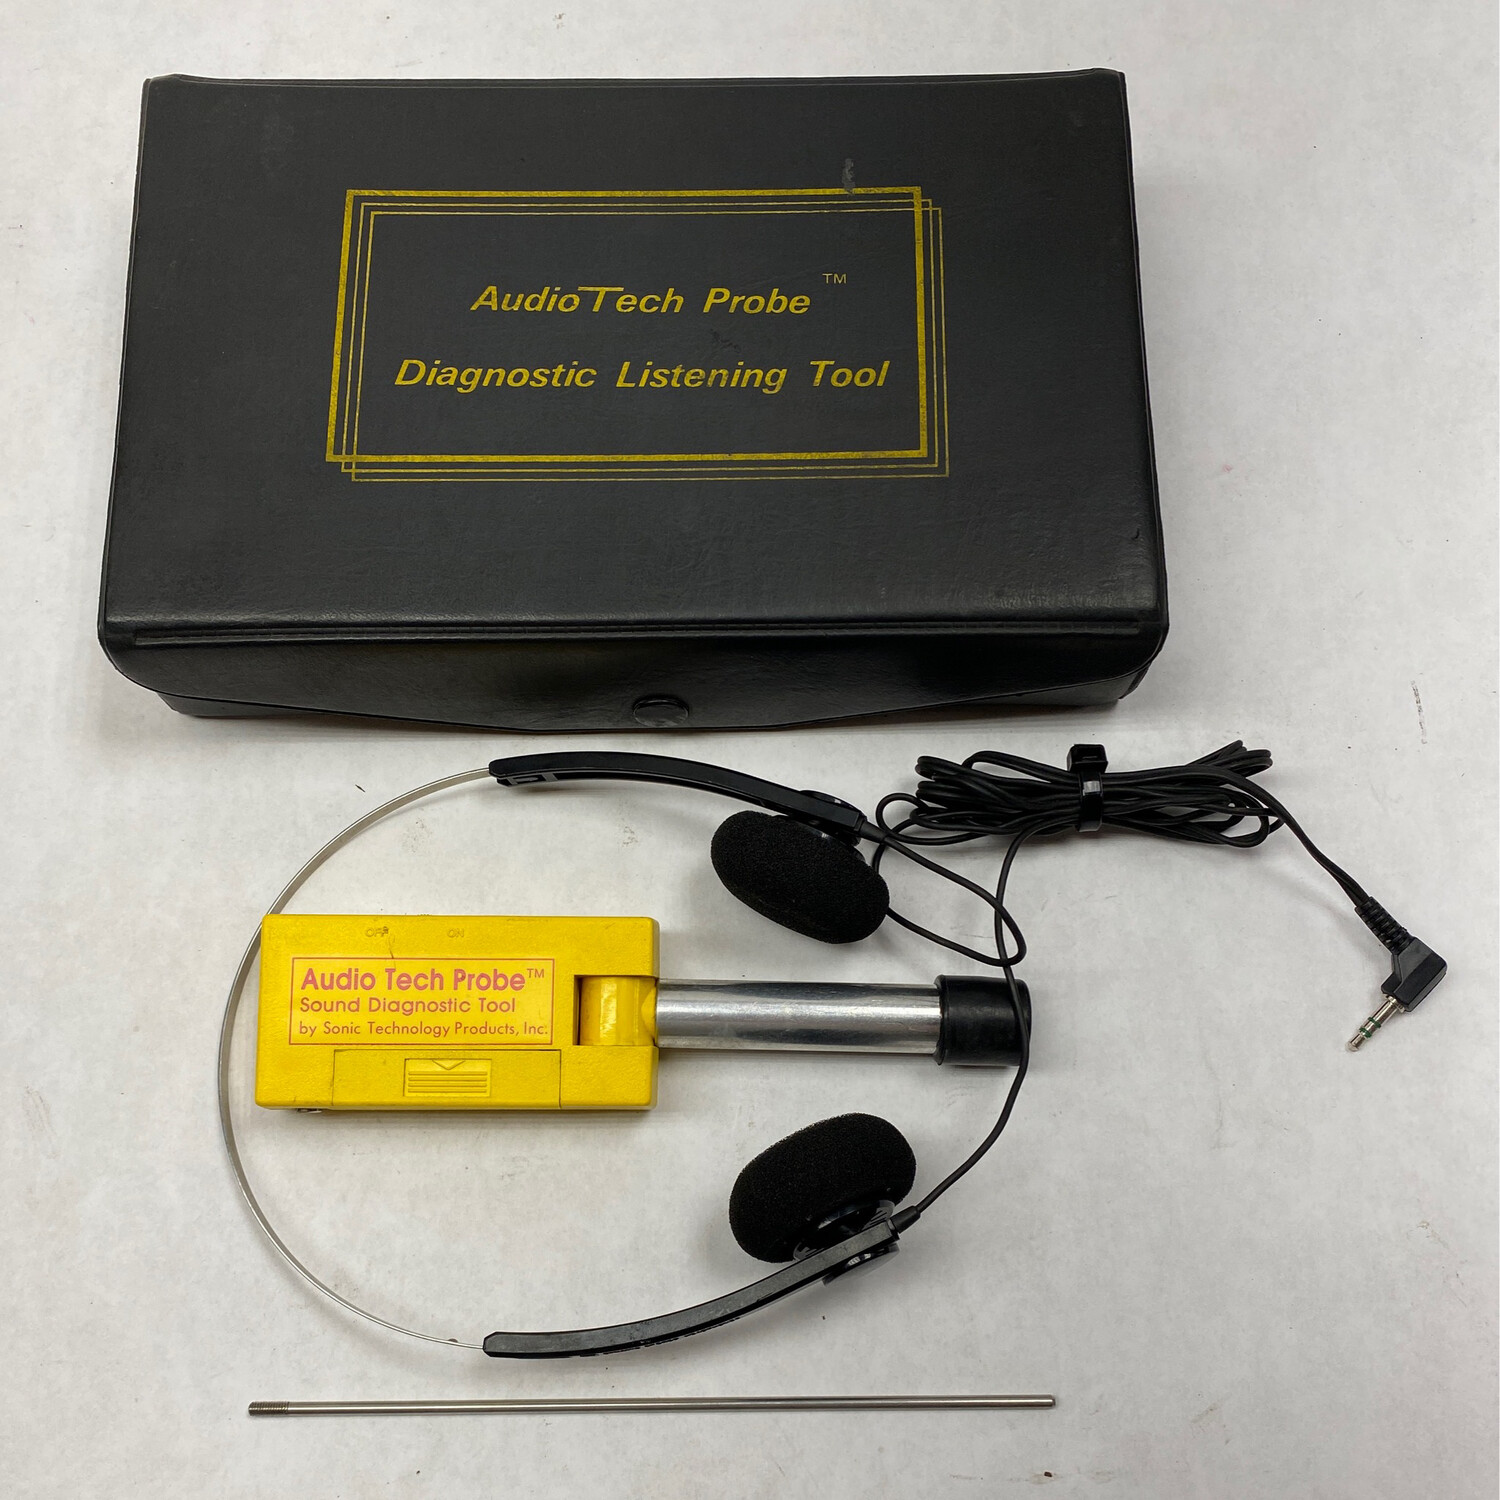 AudioTech Probe Diagnostic Listening Tool